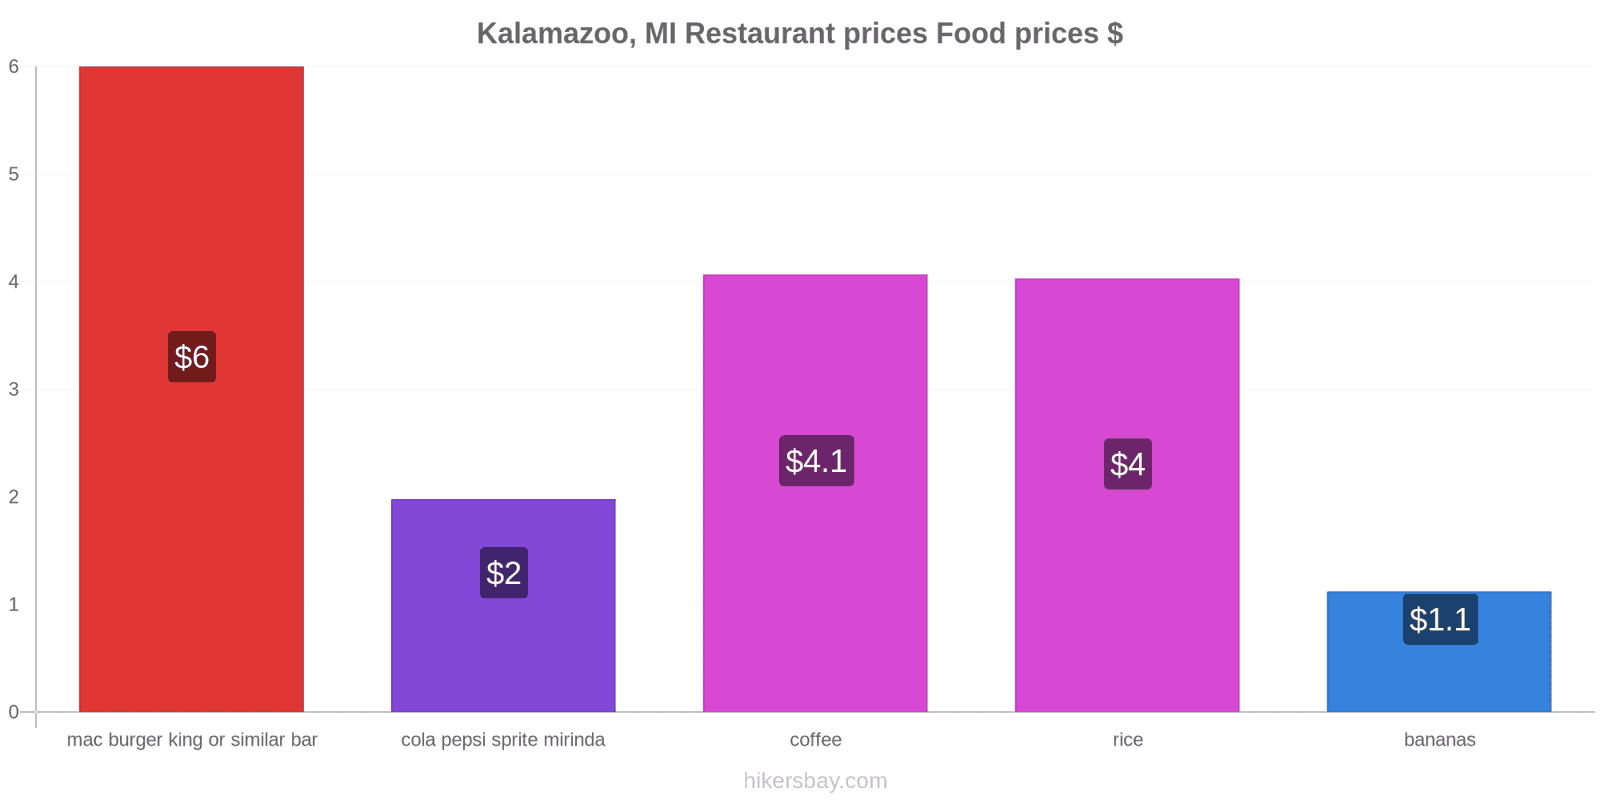 Kalamazoo, MI price changes hikersbay.com